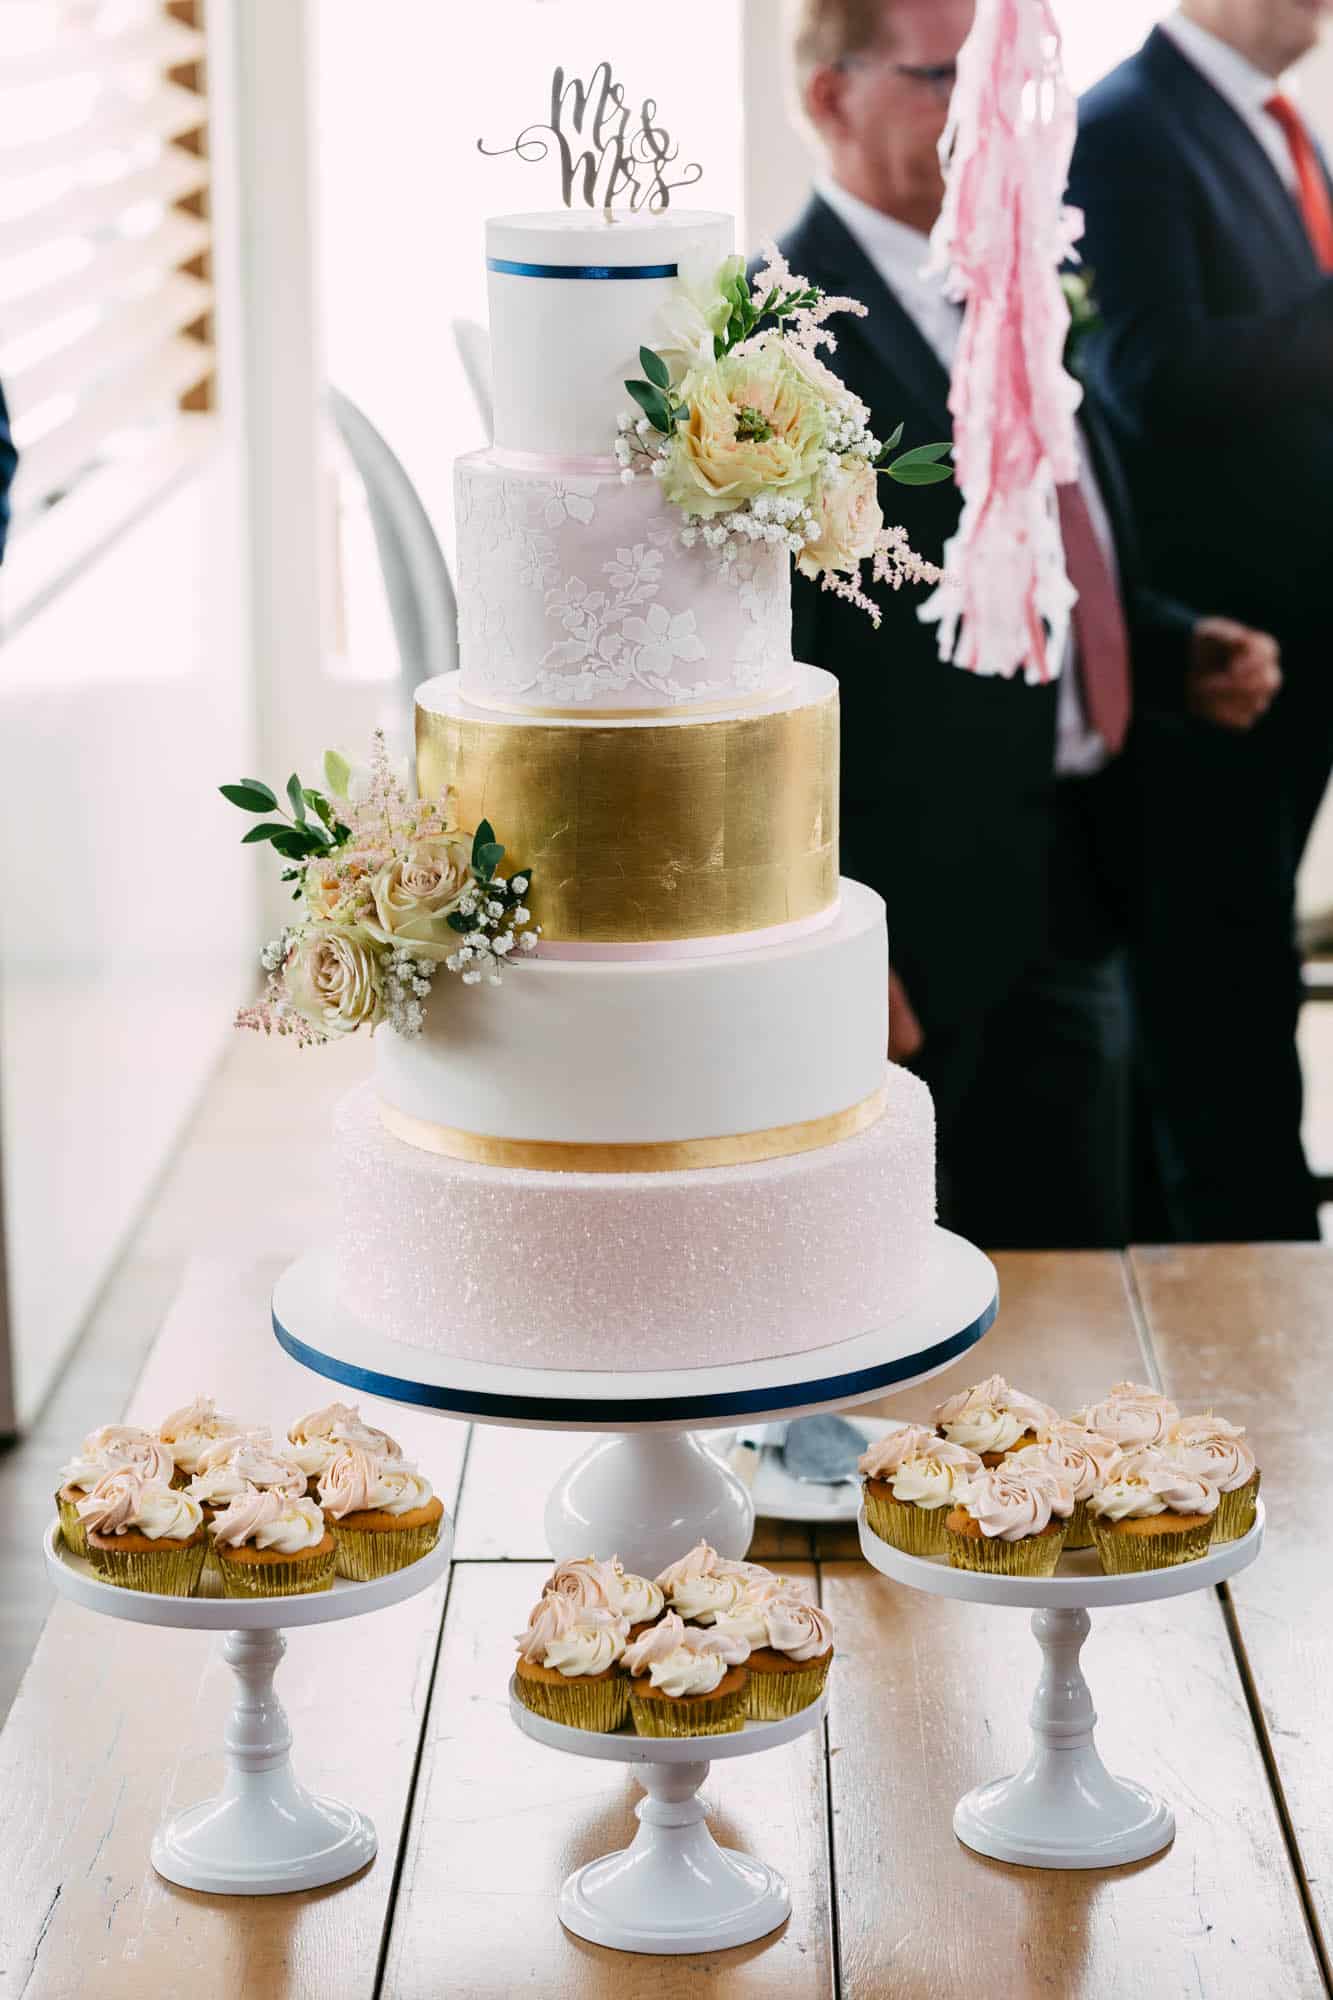 5-layer wedding cake